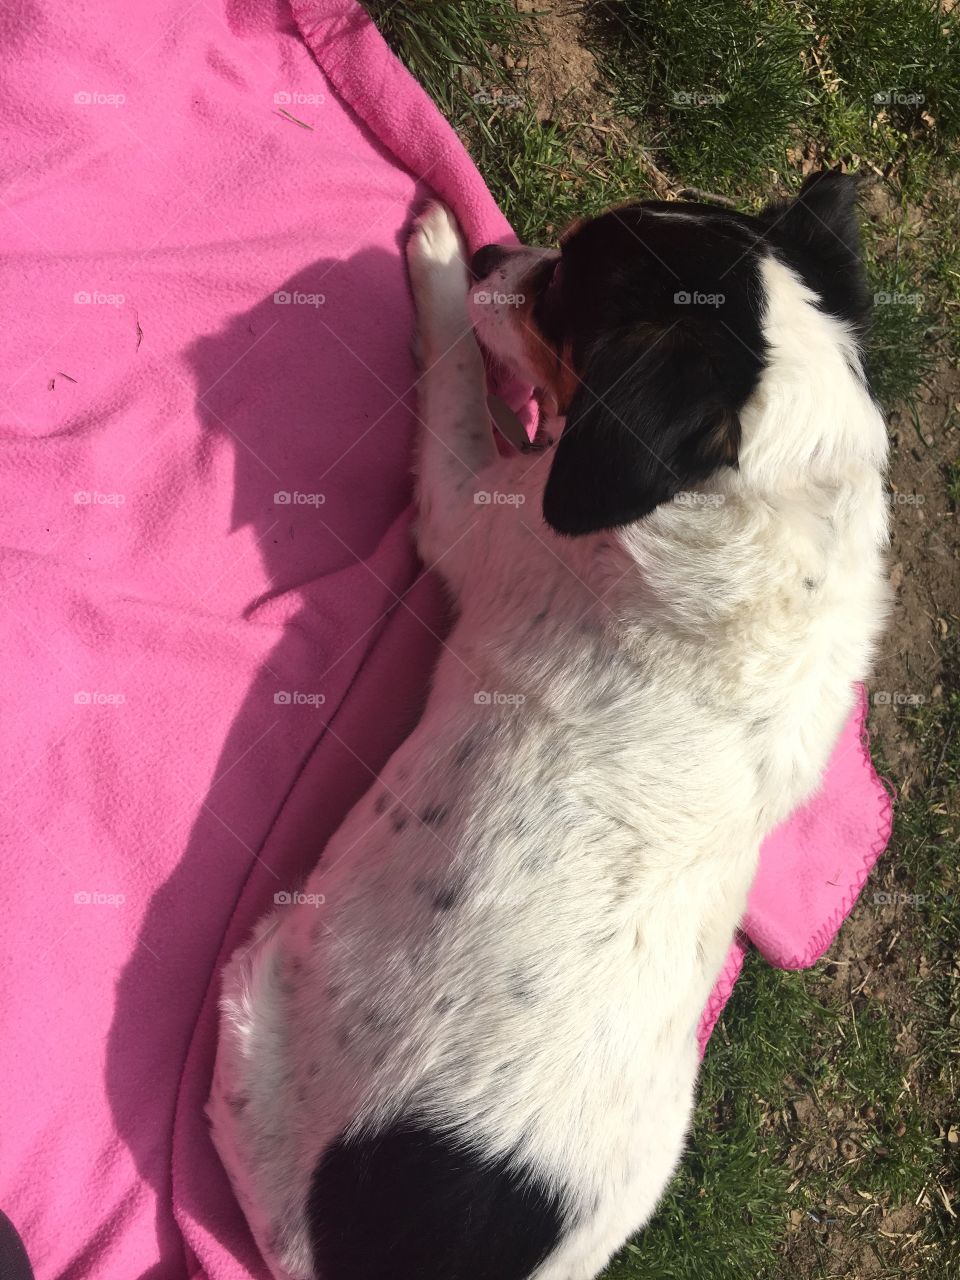 Dog laying on pink blanket outsife